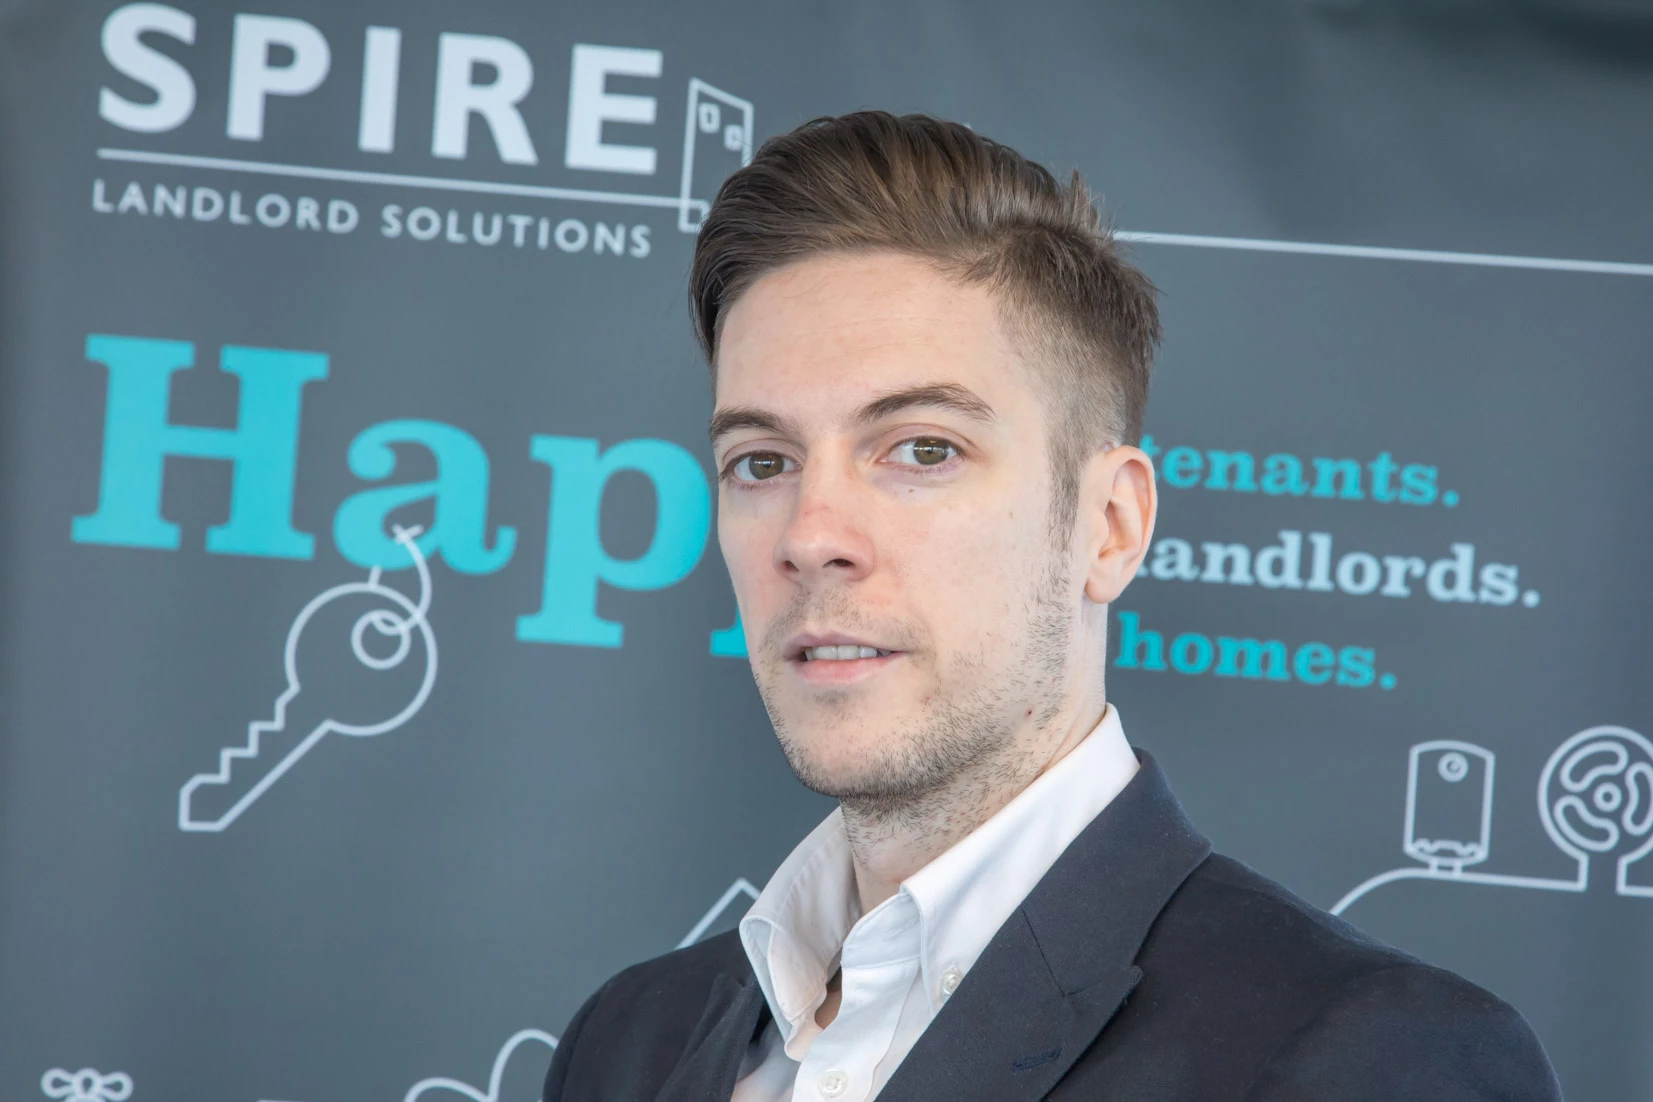 James Batham, founder of Spire Landlord Solutions 